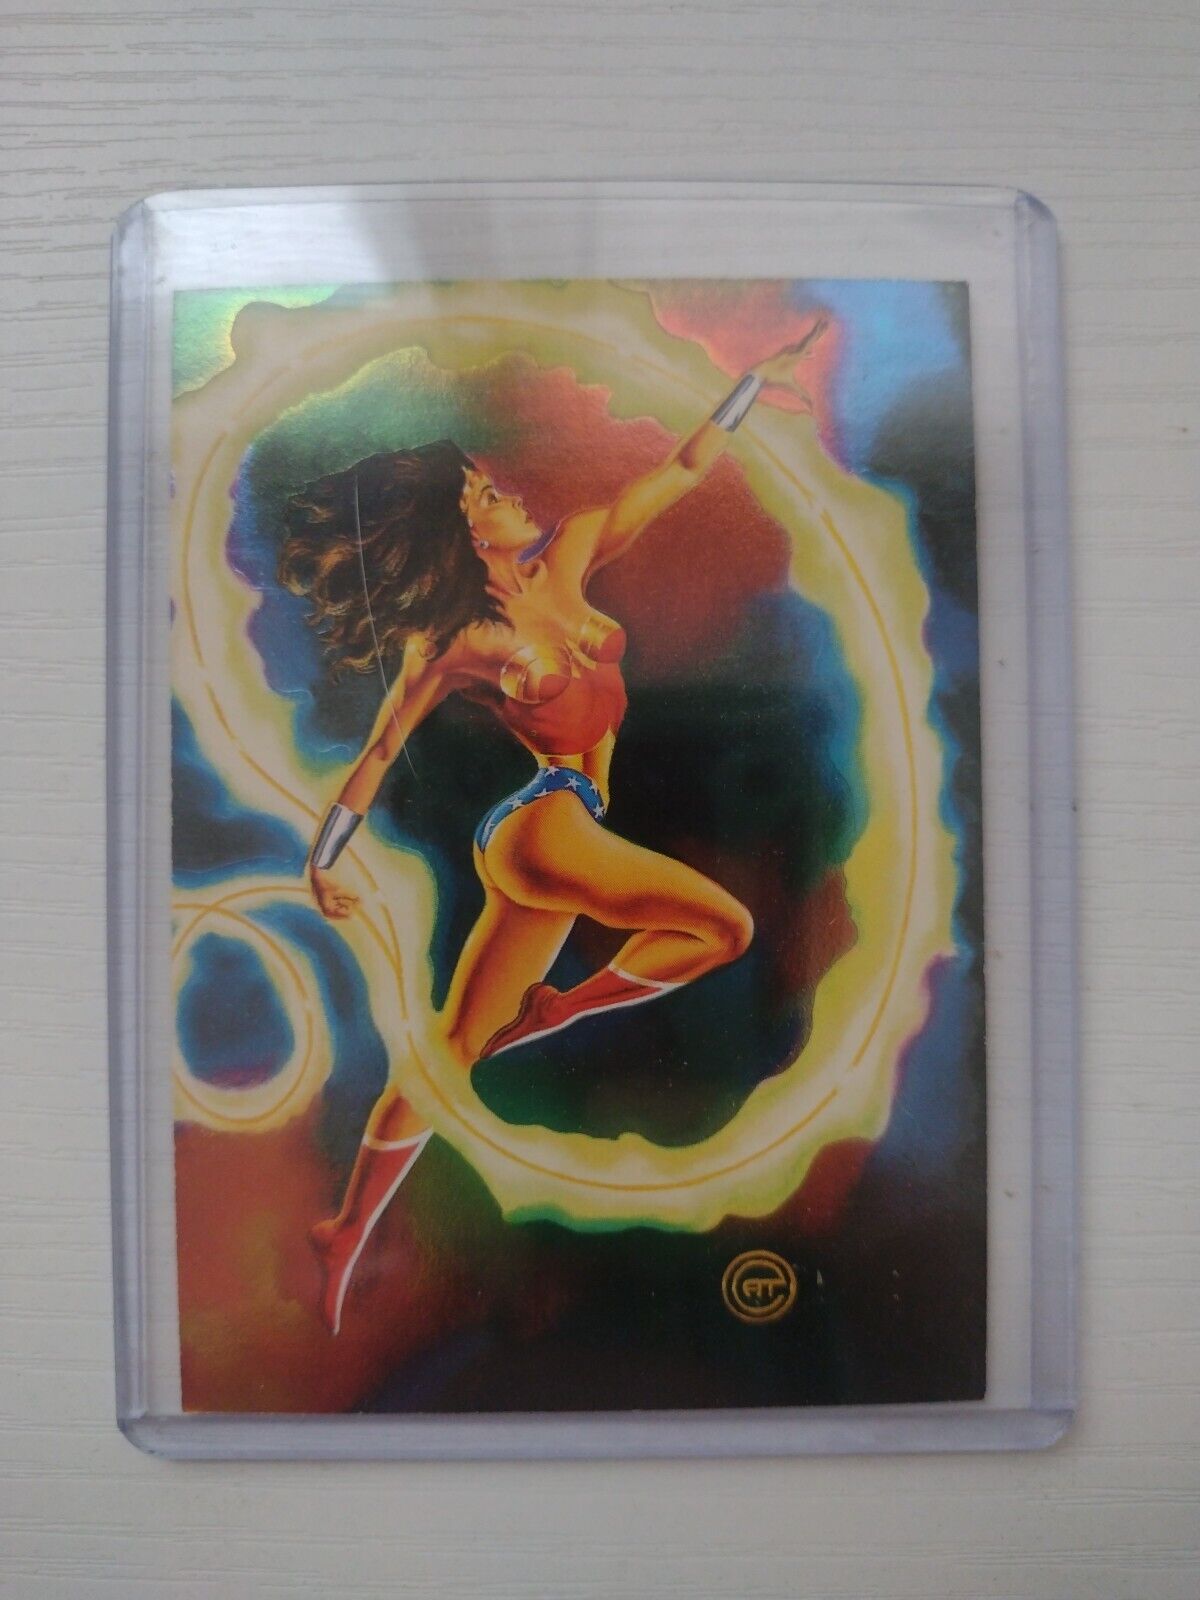 1994 SkyBox DC Master Series Foil Chase ERROR Card Wonder Woman #F1 HYPER RARE🔥